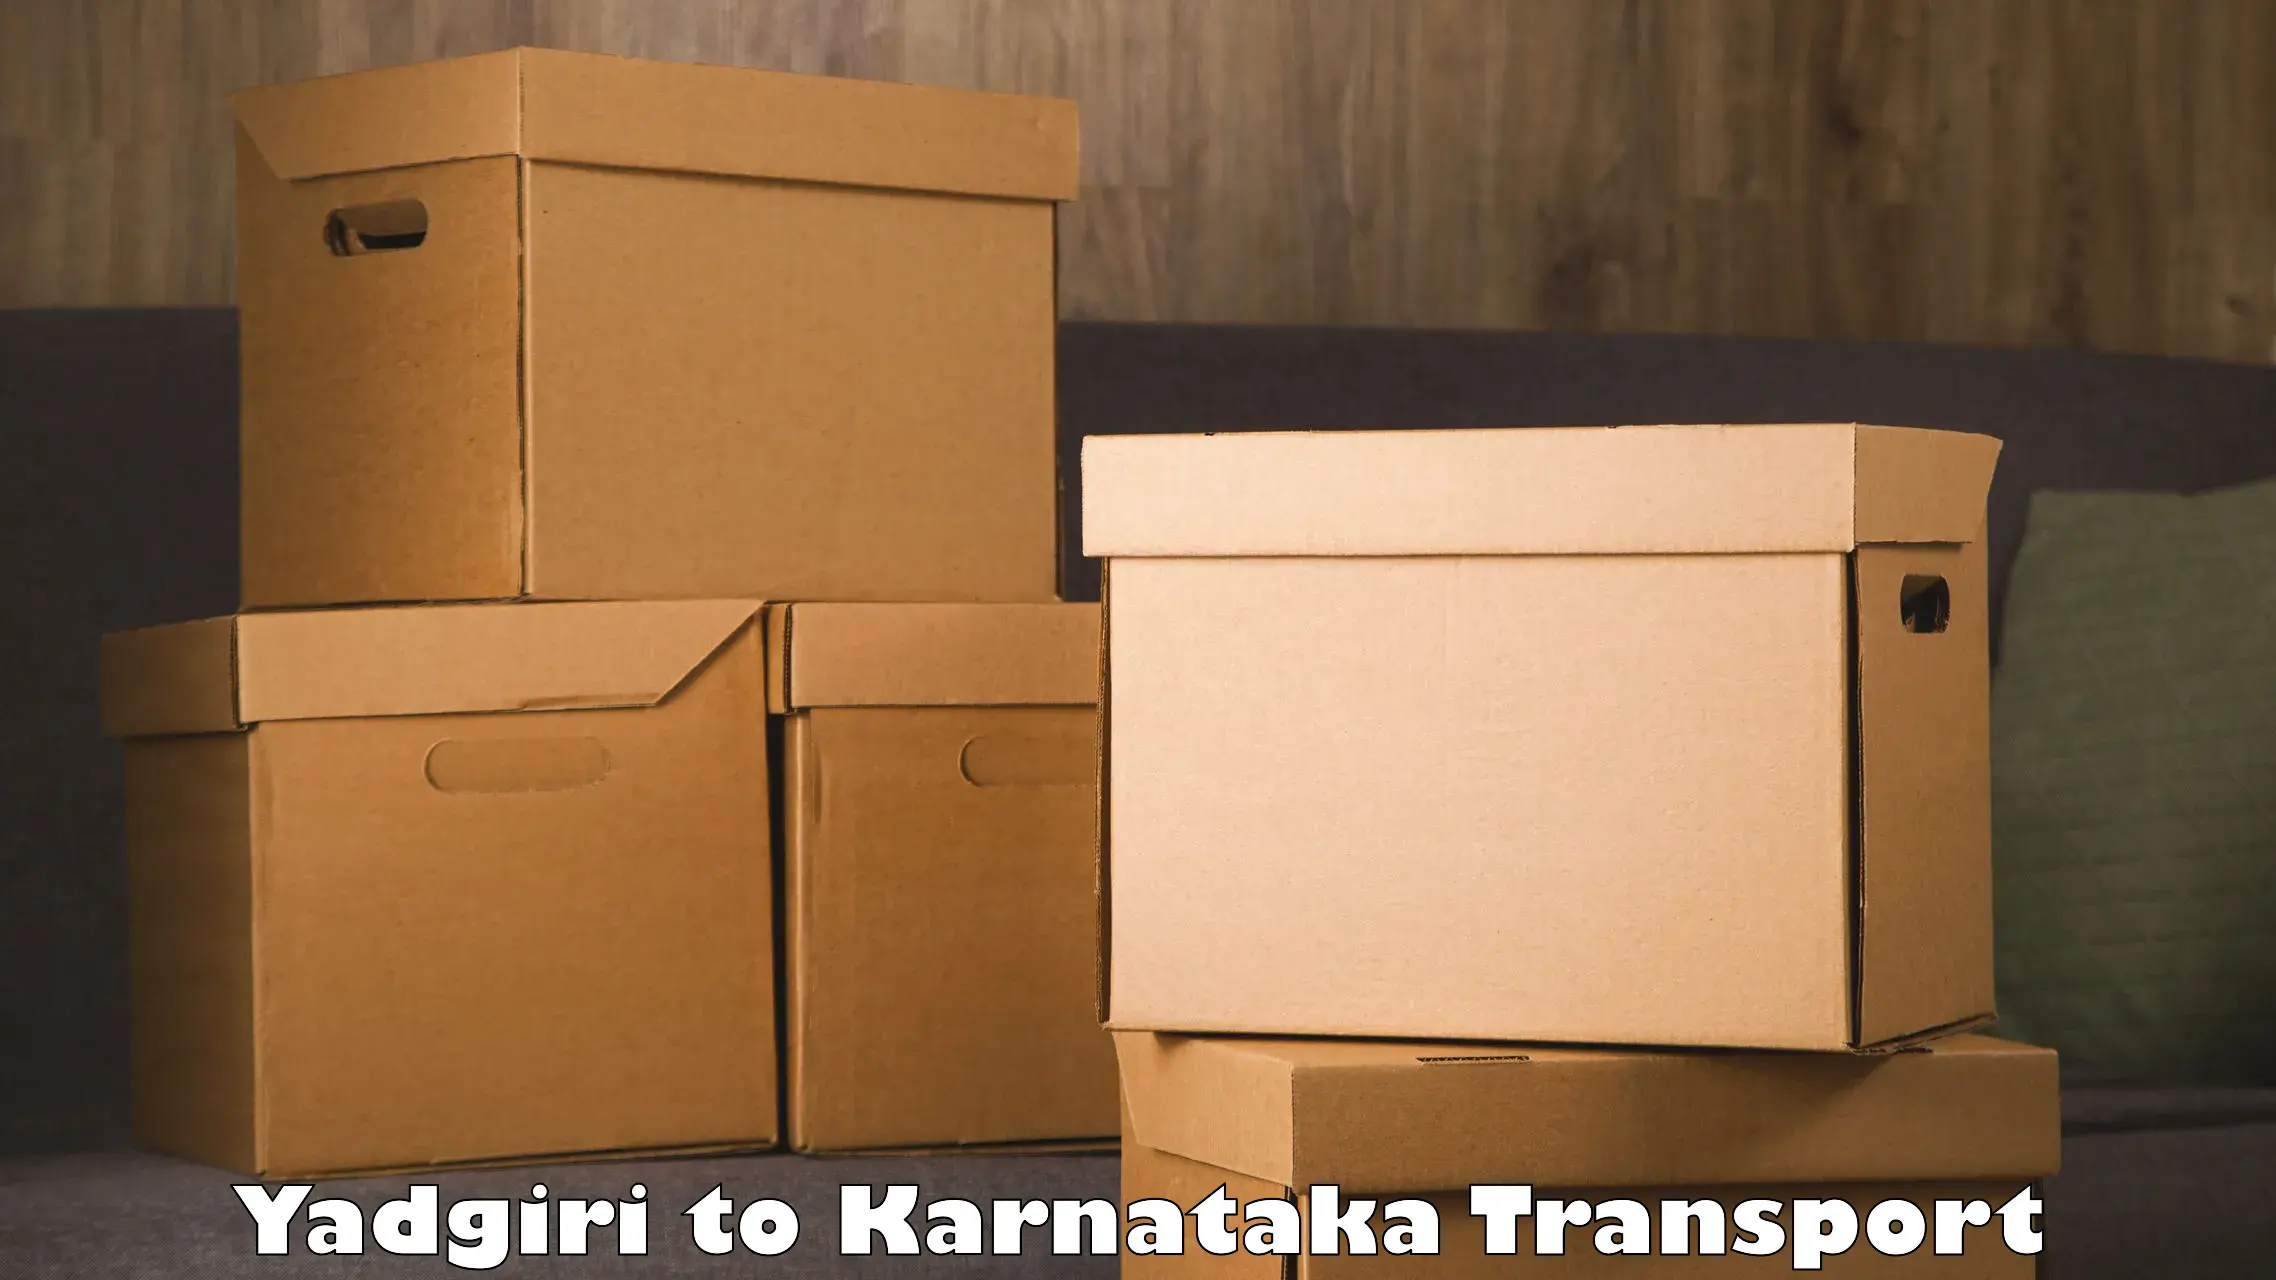 Furniture transport service Yadgiri to Karnataka